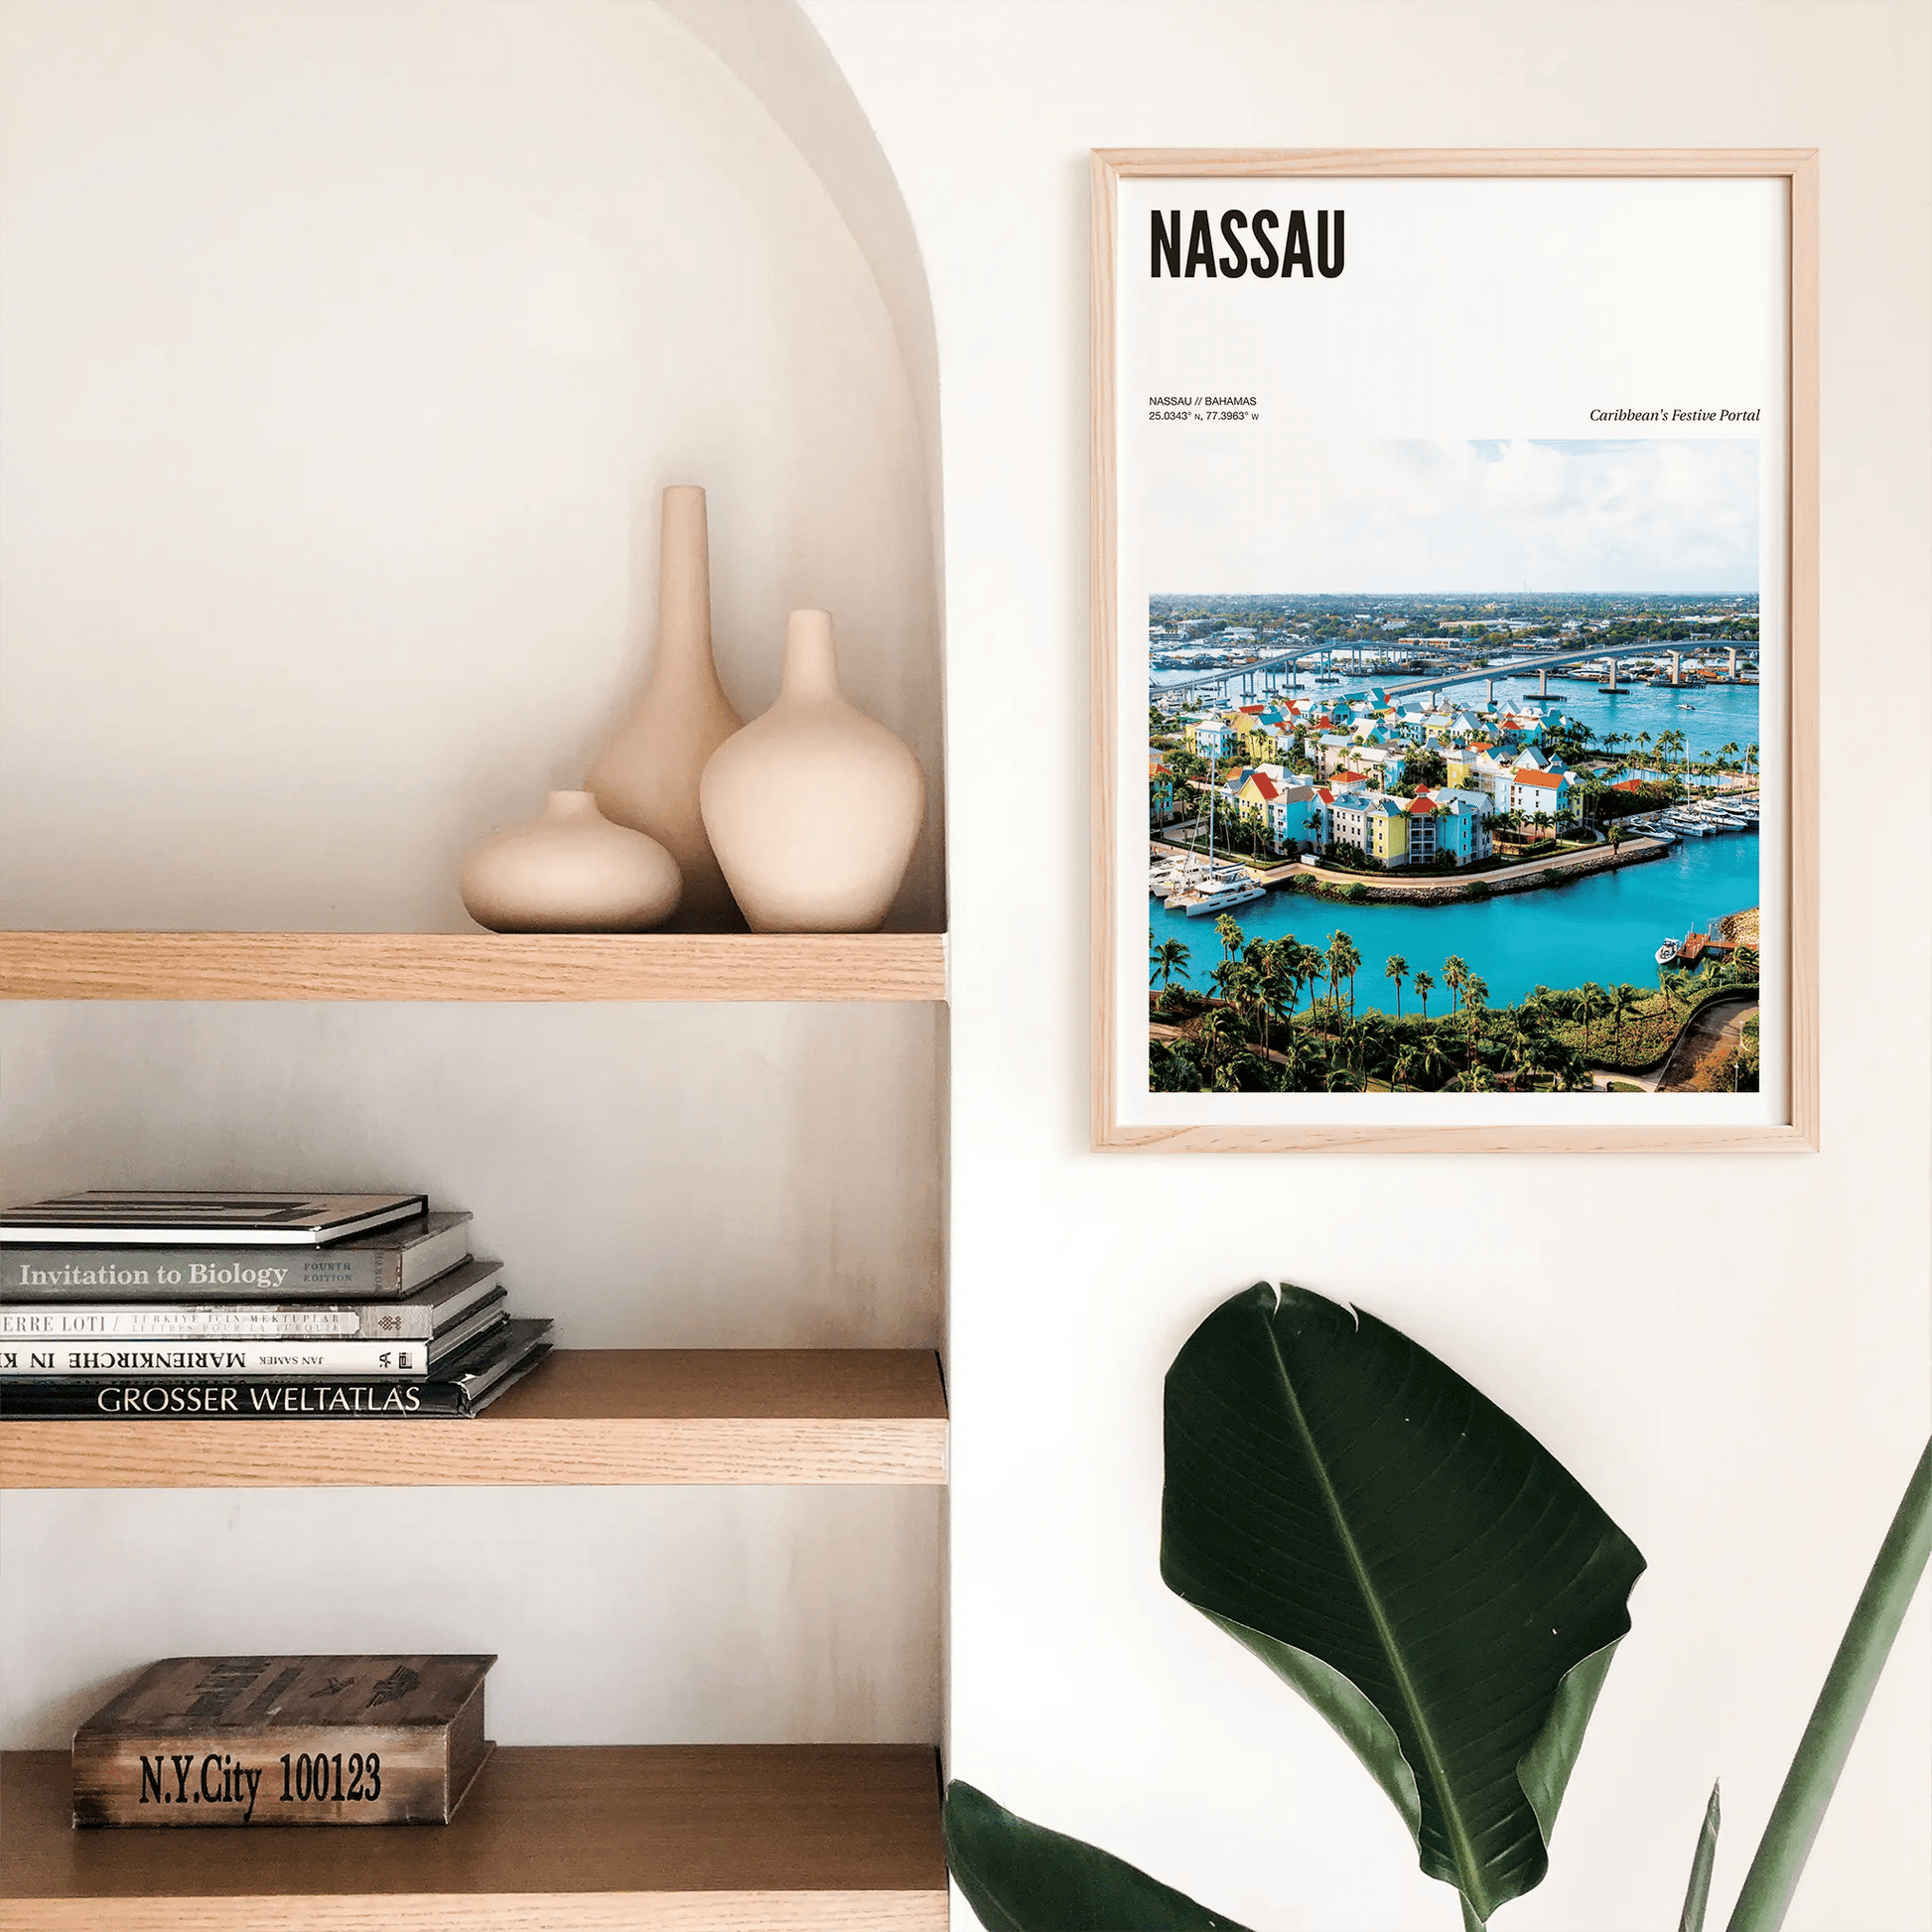 Nassau Odyssey Poster - The Globe Gallery